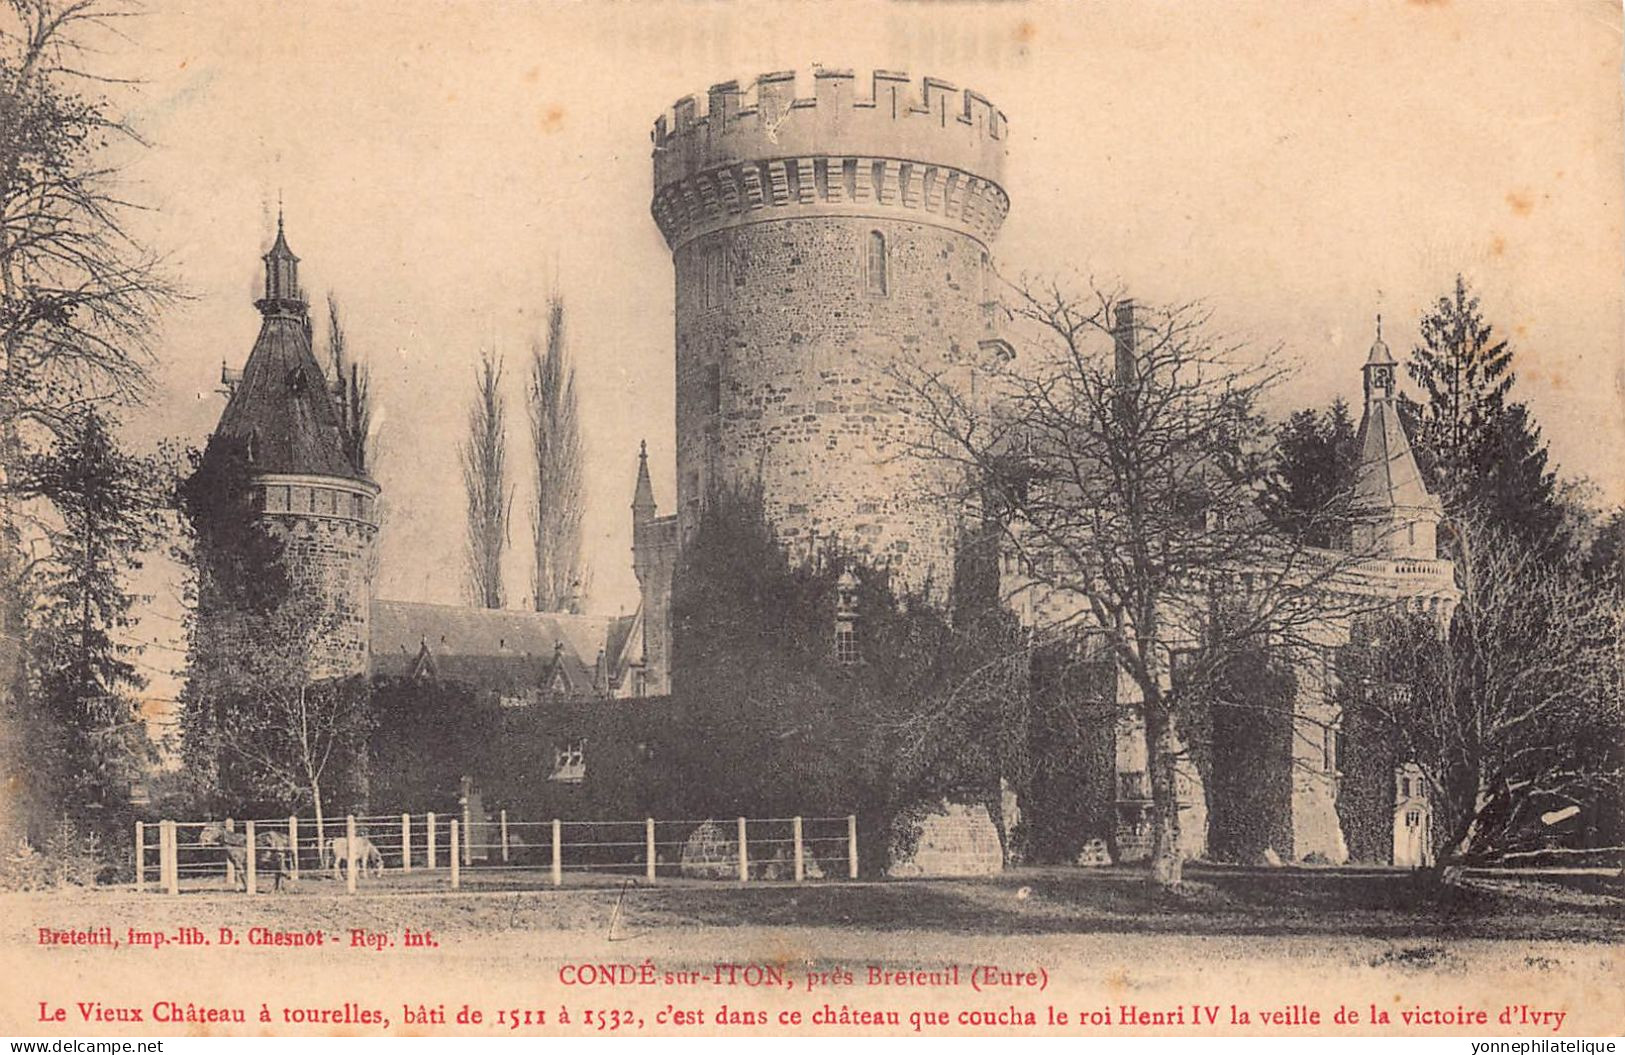 27 - EURE - Canton de BRETEUIL - CONDE SUR ITON - collection de 25 CPA Château - LOT 27-17G